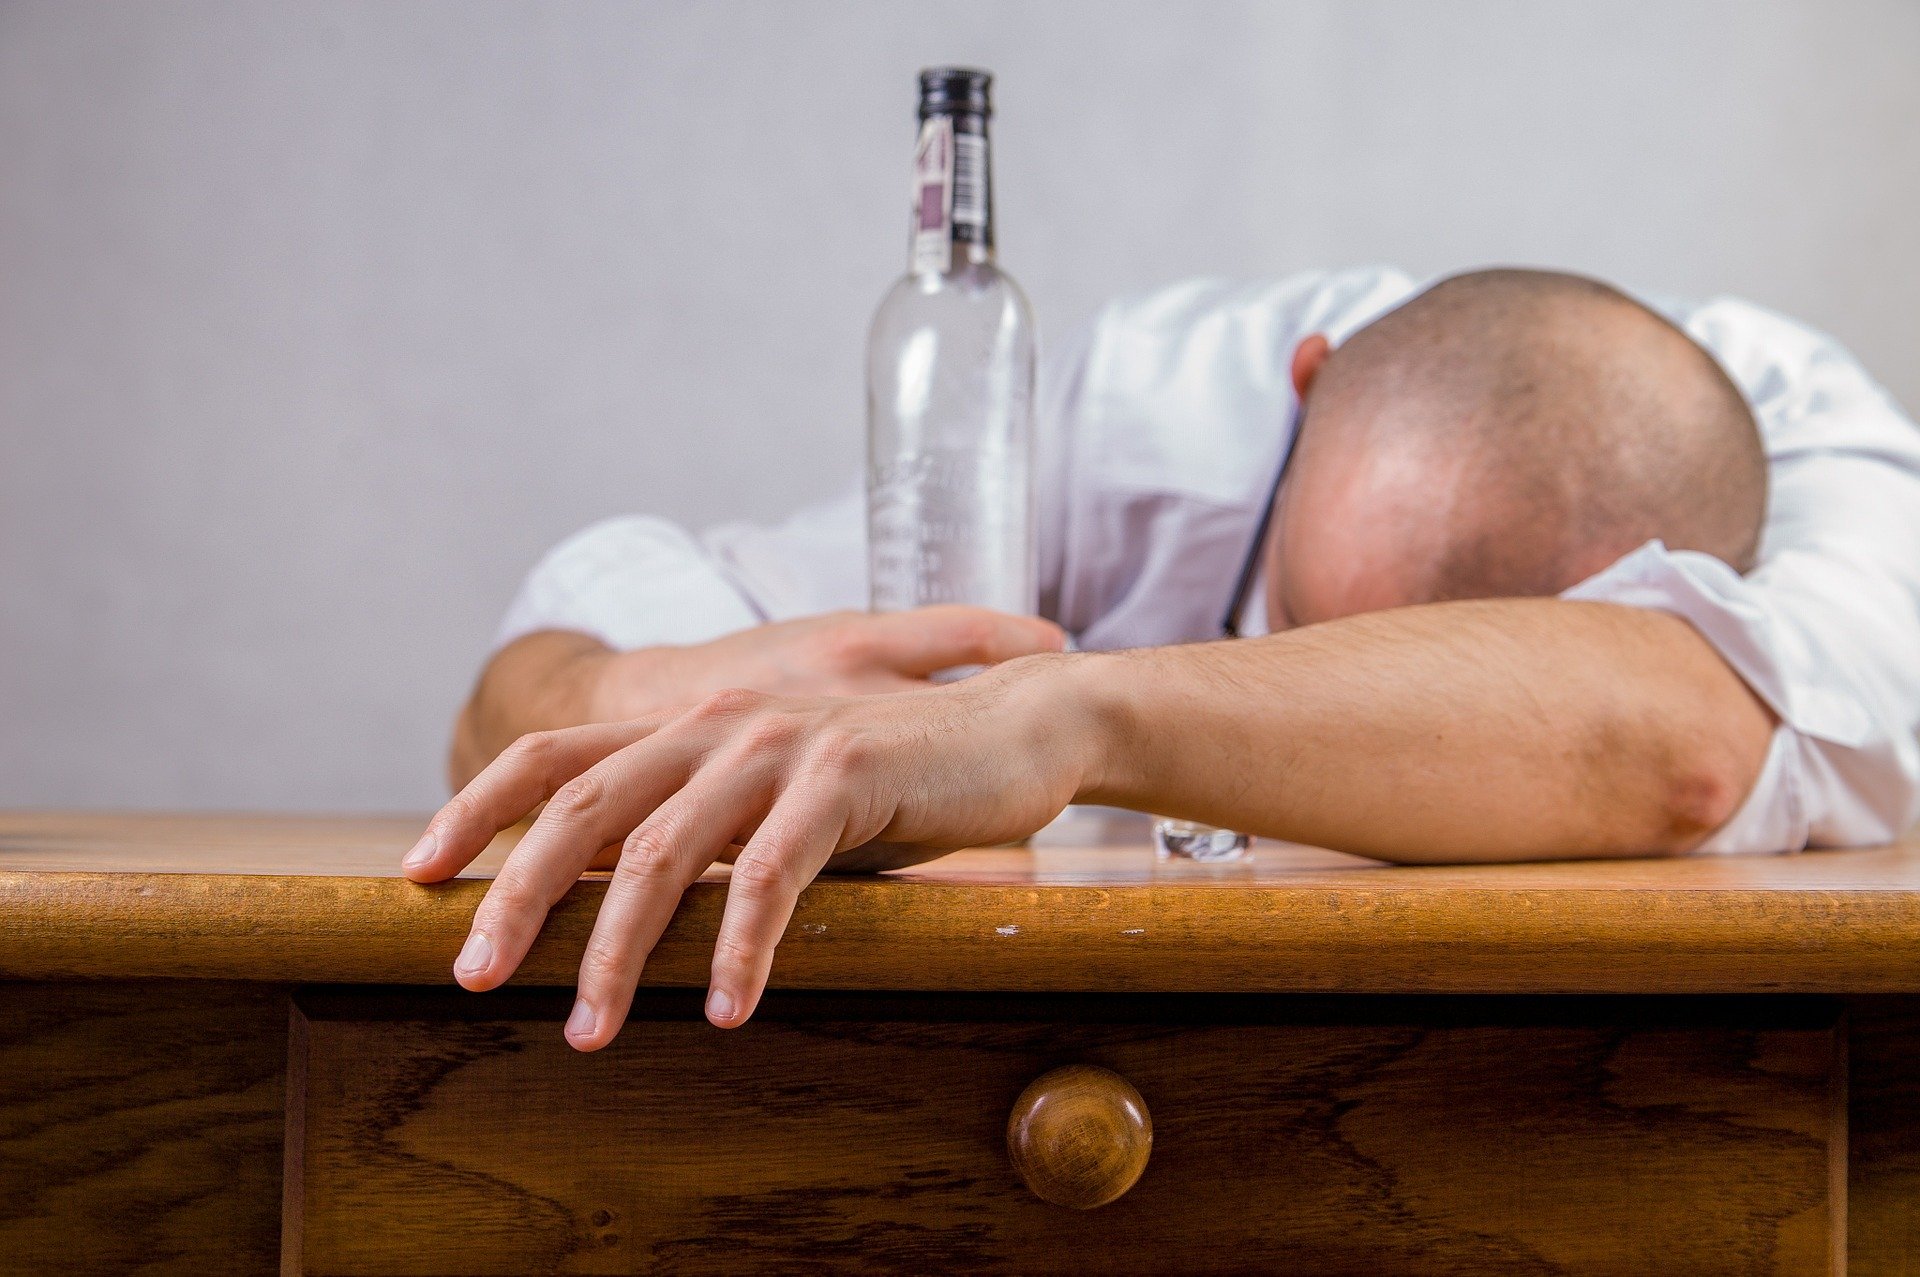 Homem deitado na mesa segurando garrafa